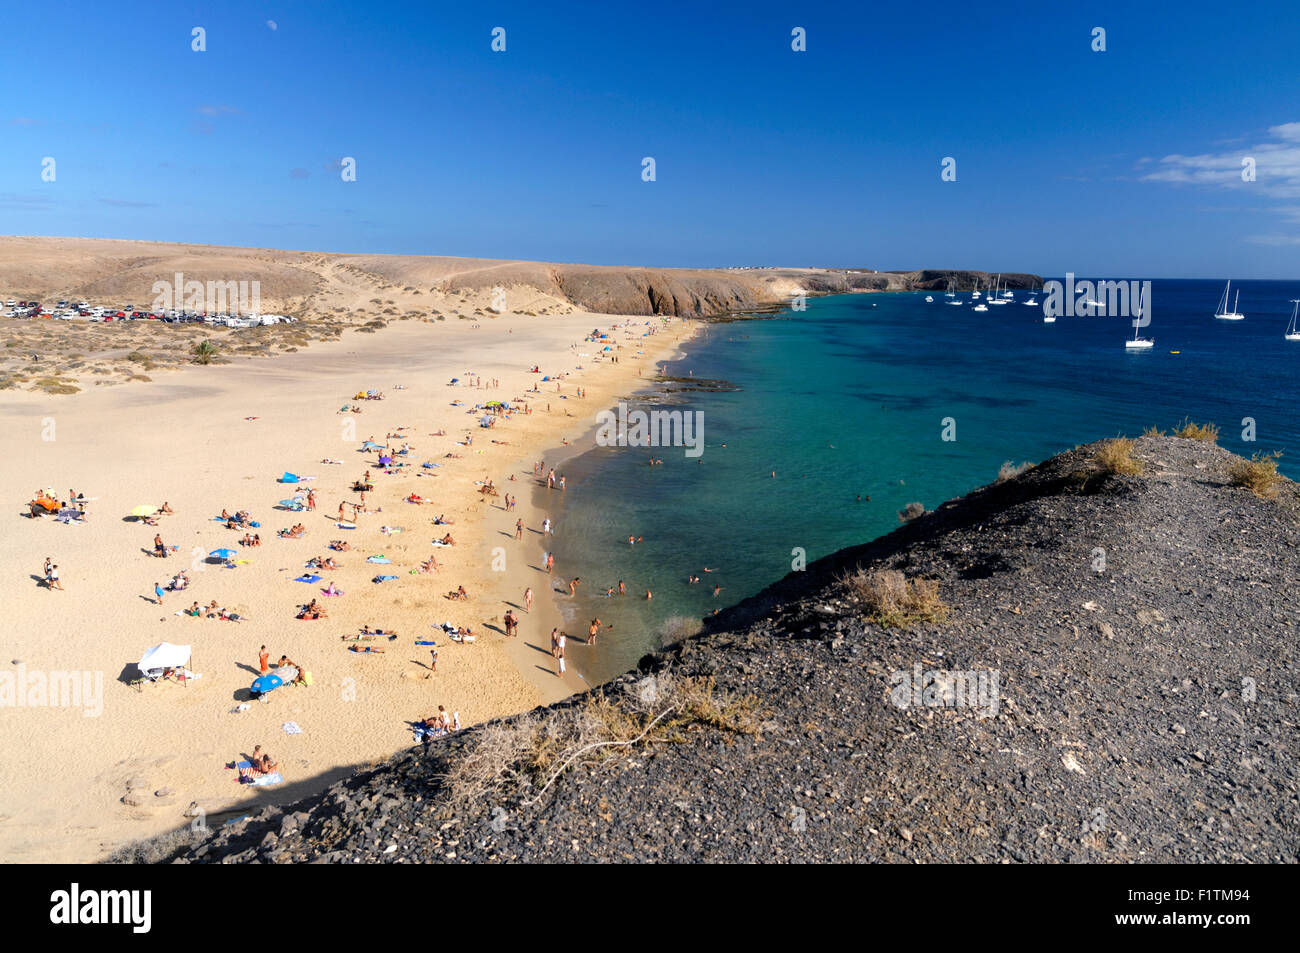 Playa Mujeres beach, Playa Blanca, Lanzarote, Canary Islands, Spain. Stock Photo